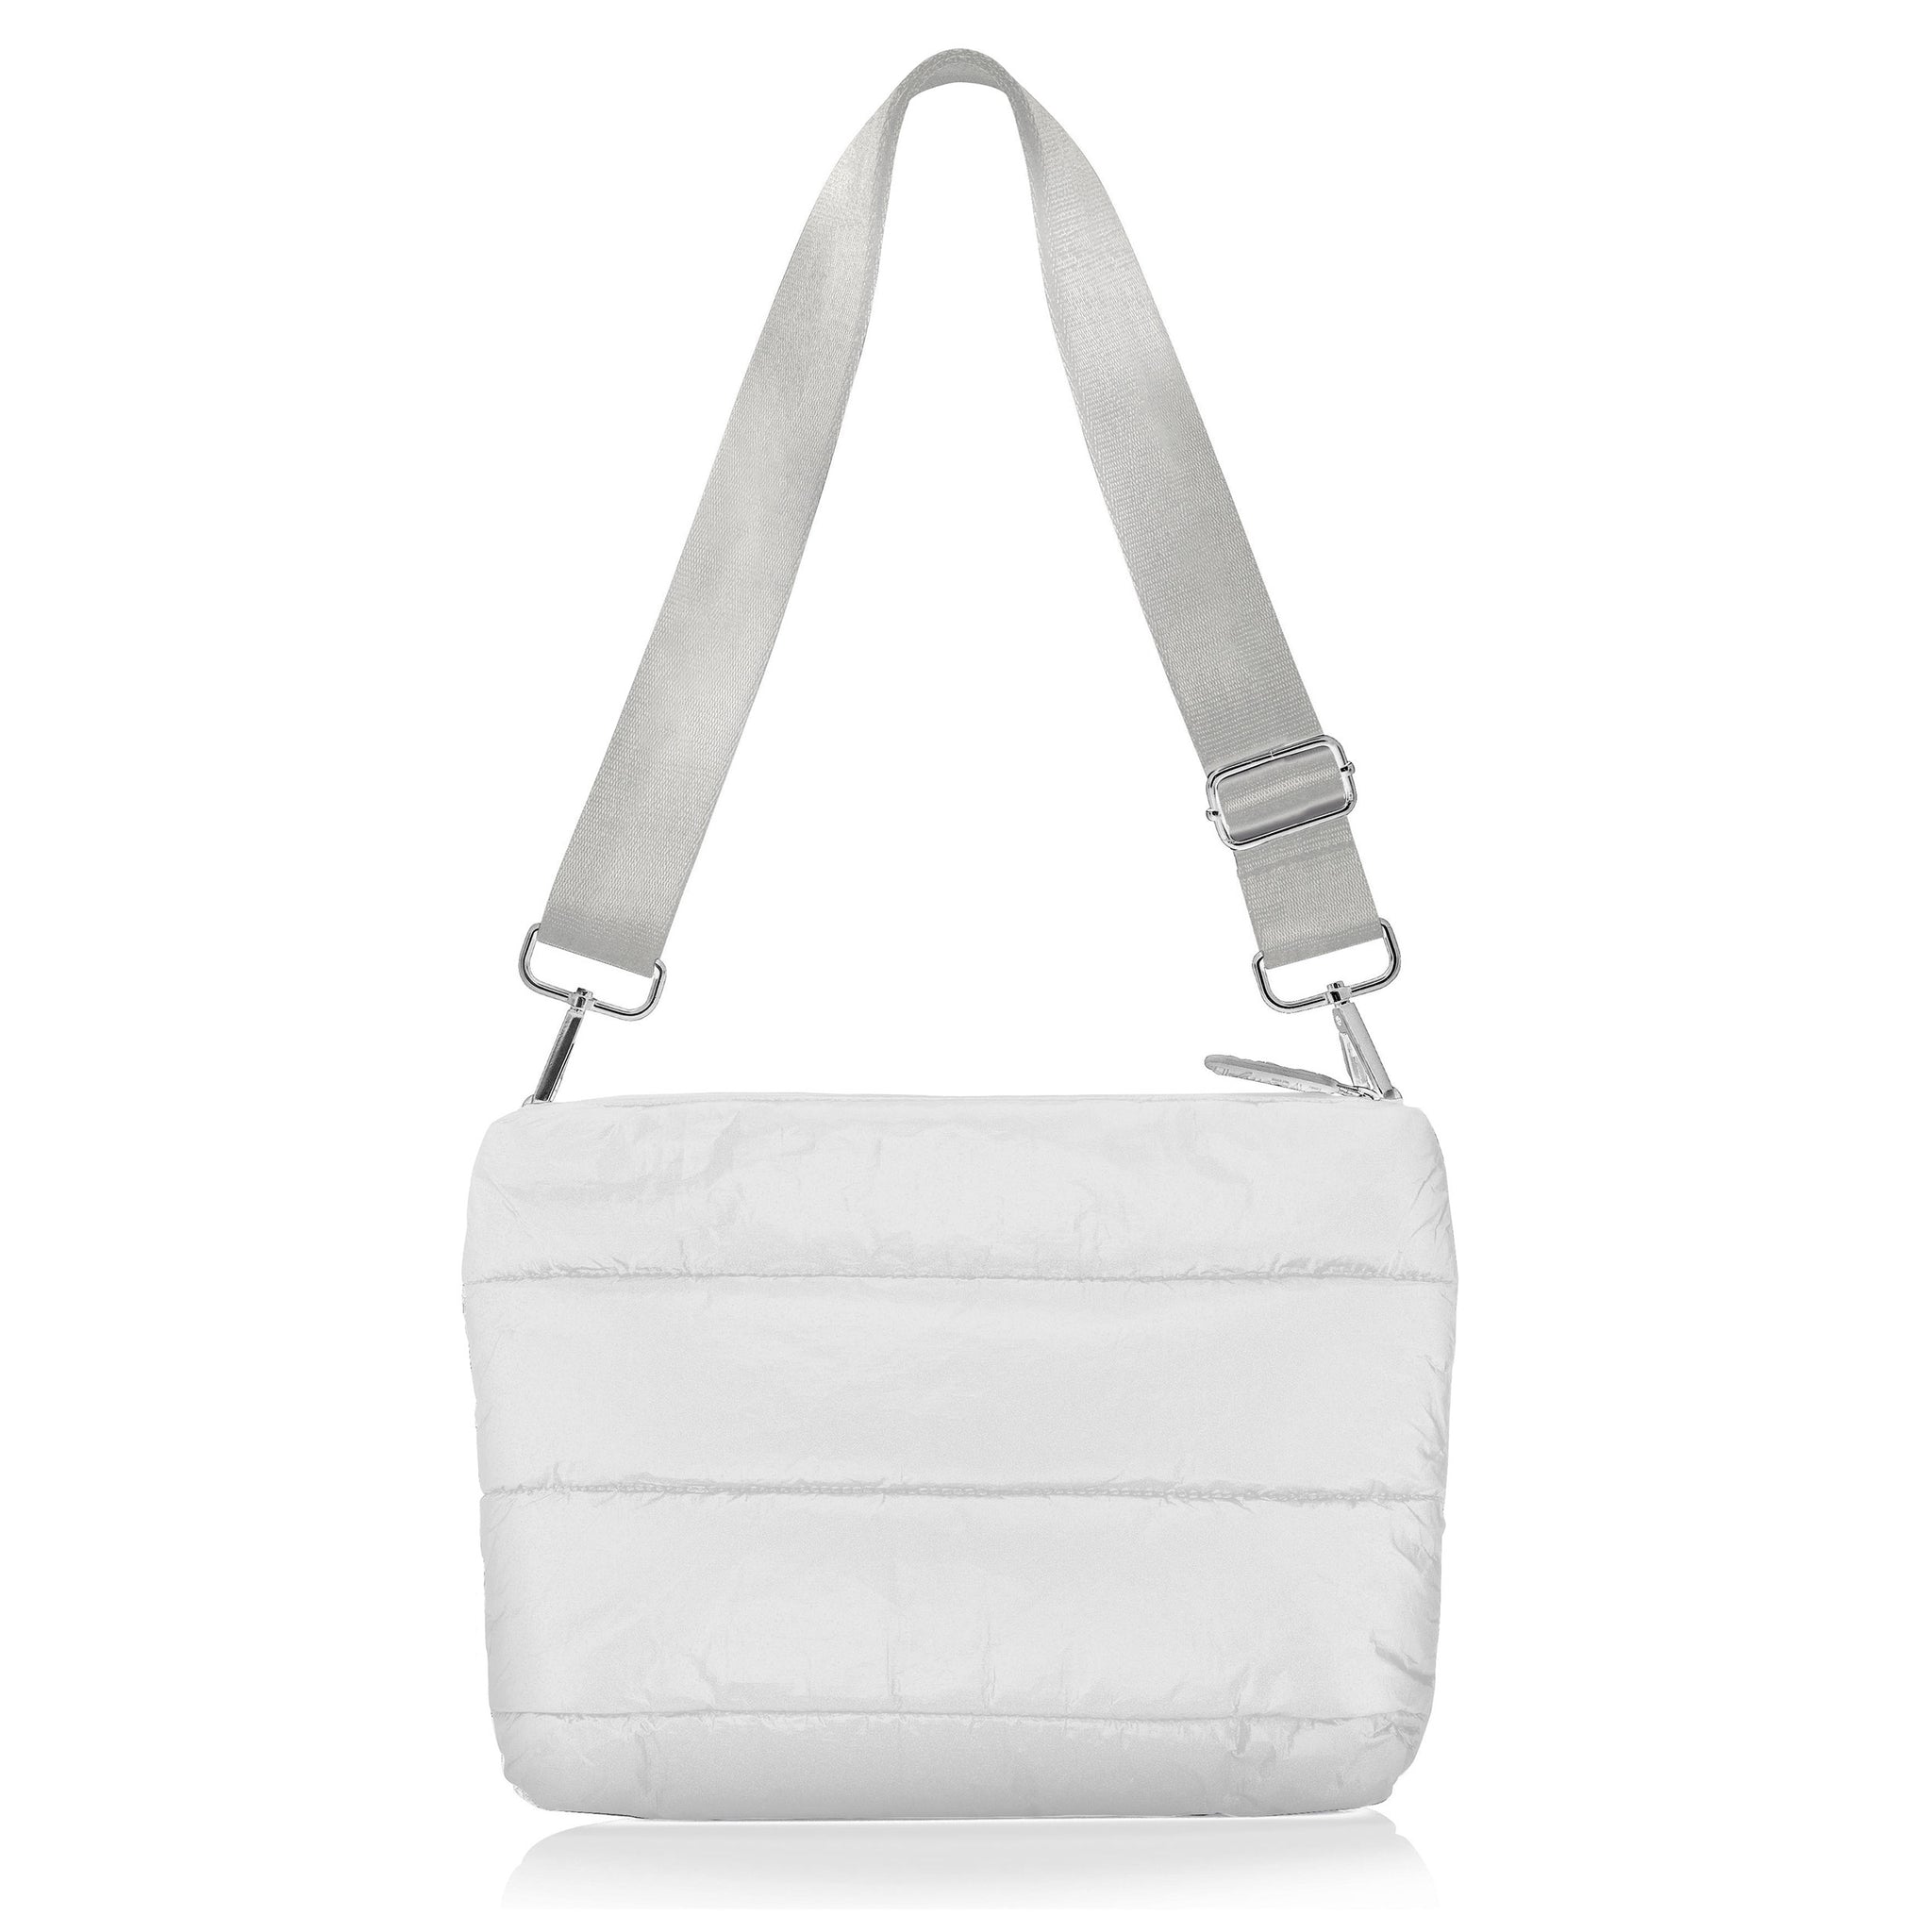 crossbody puffer purse in shimmer white